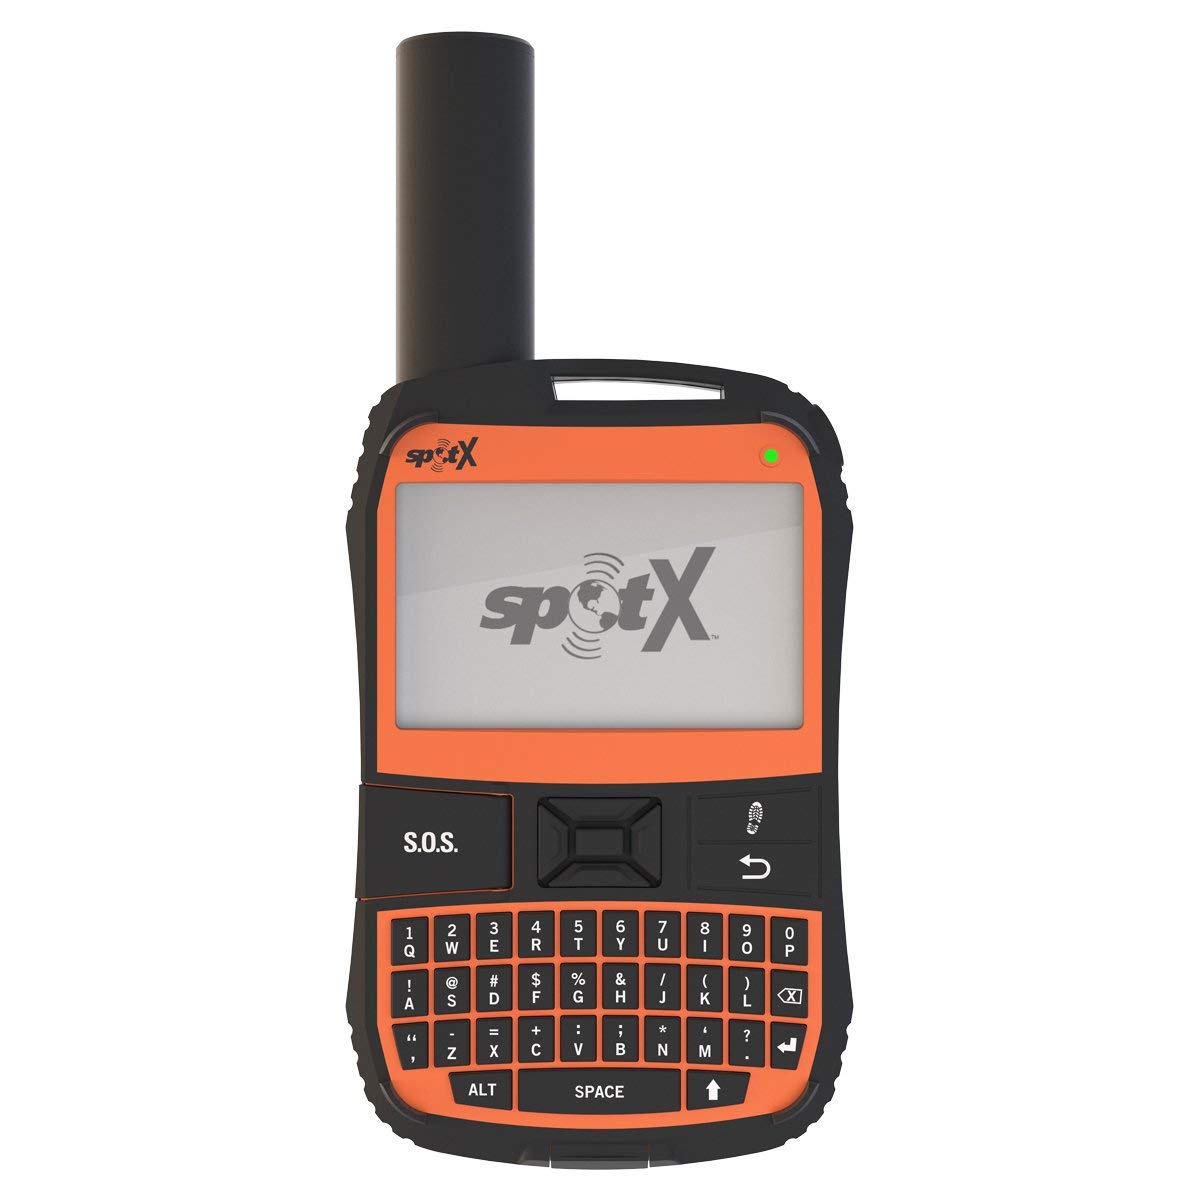 Spot X Satellite Messenger